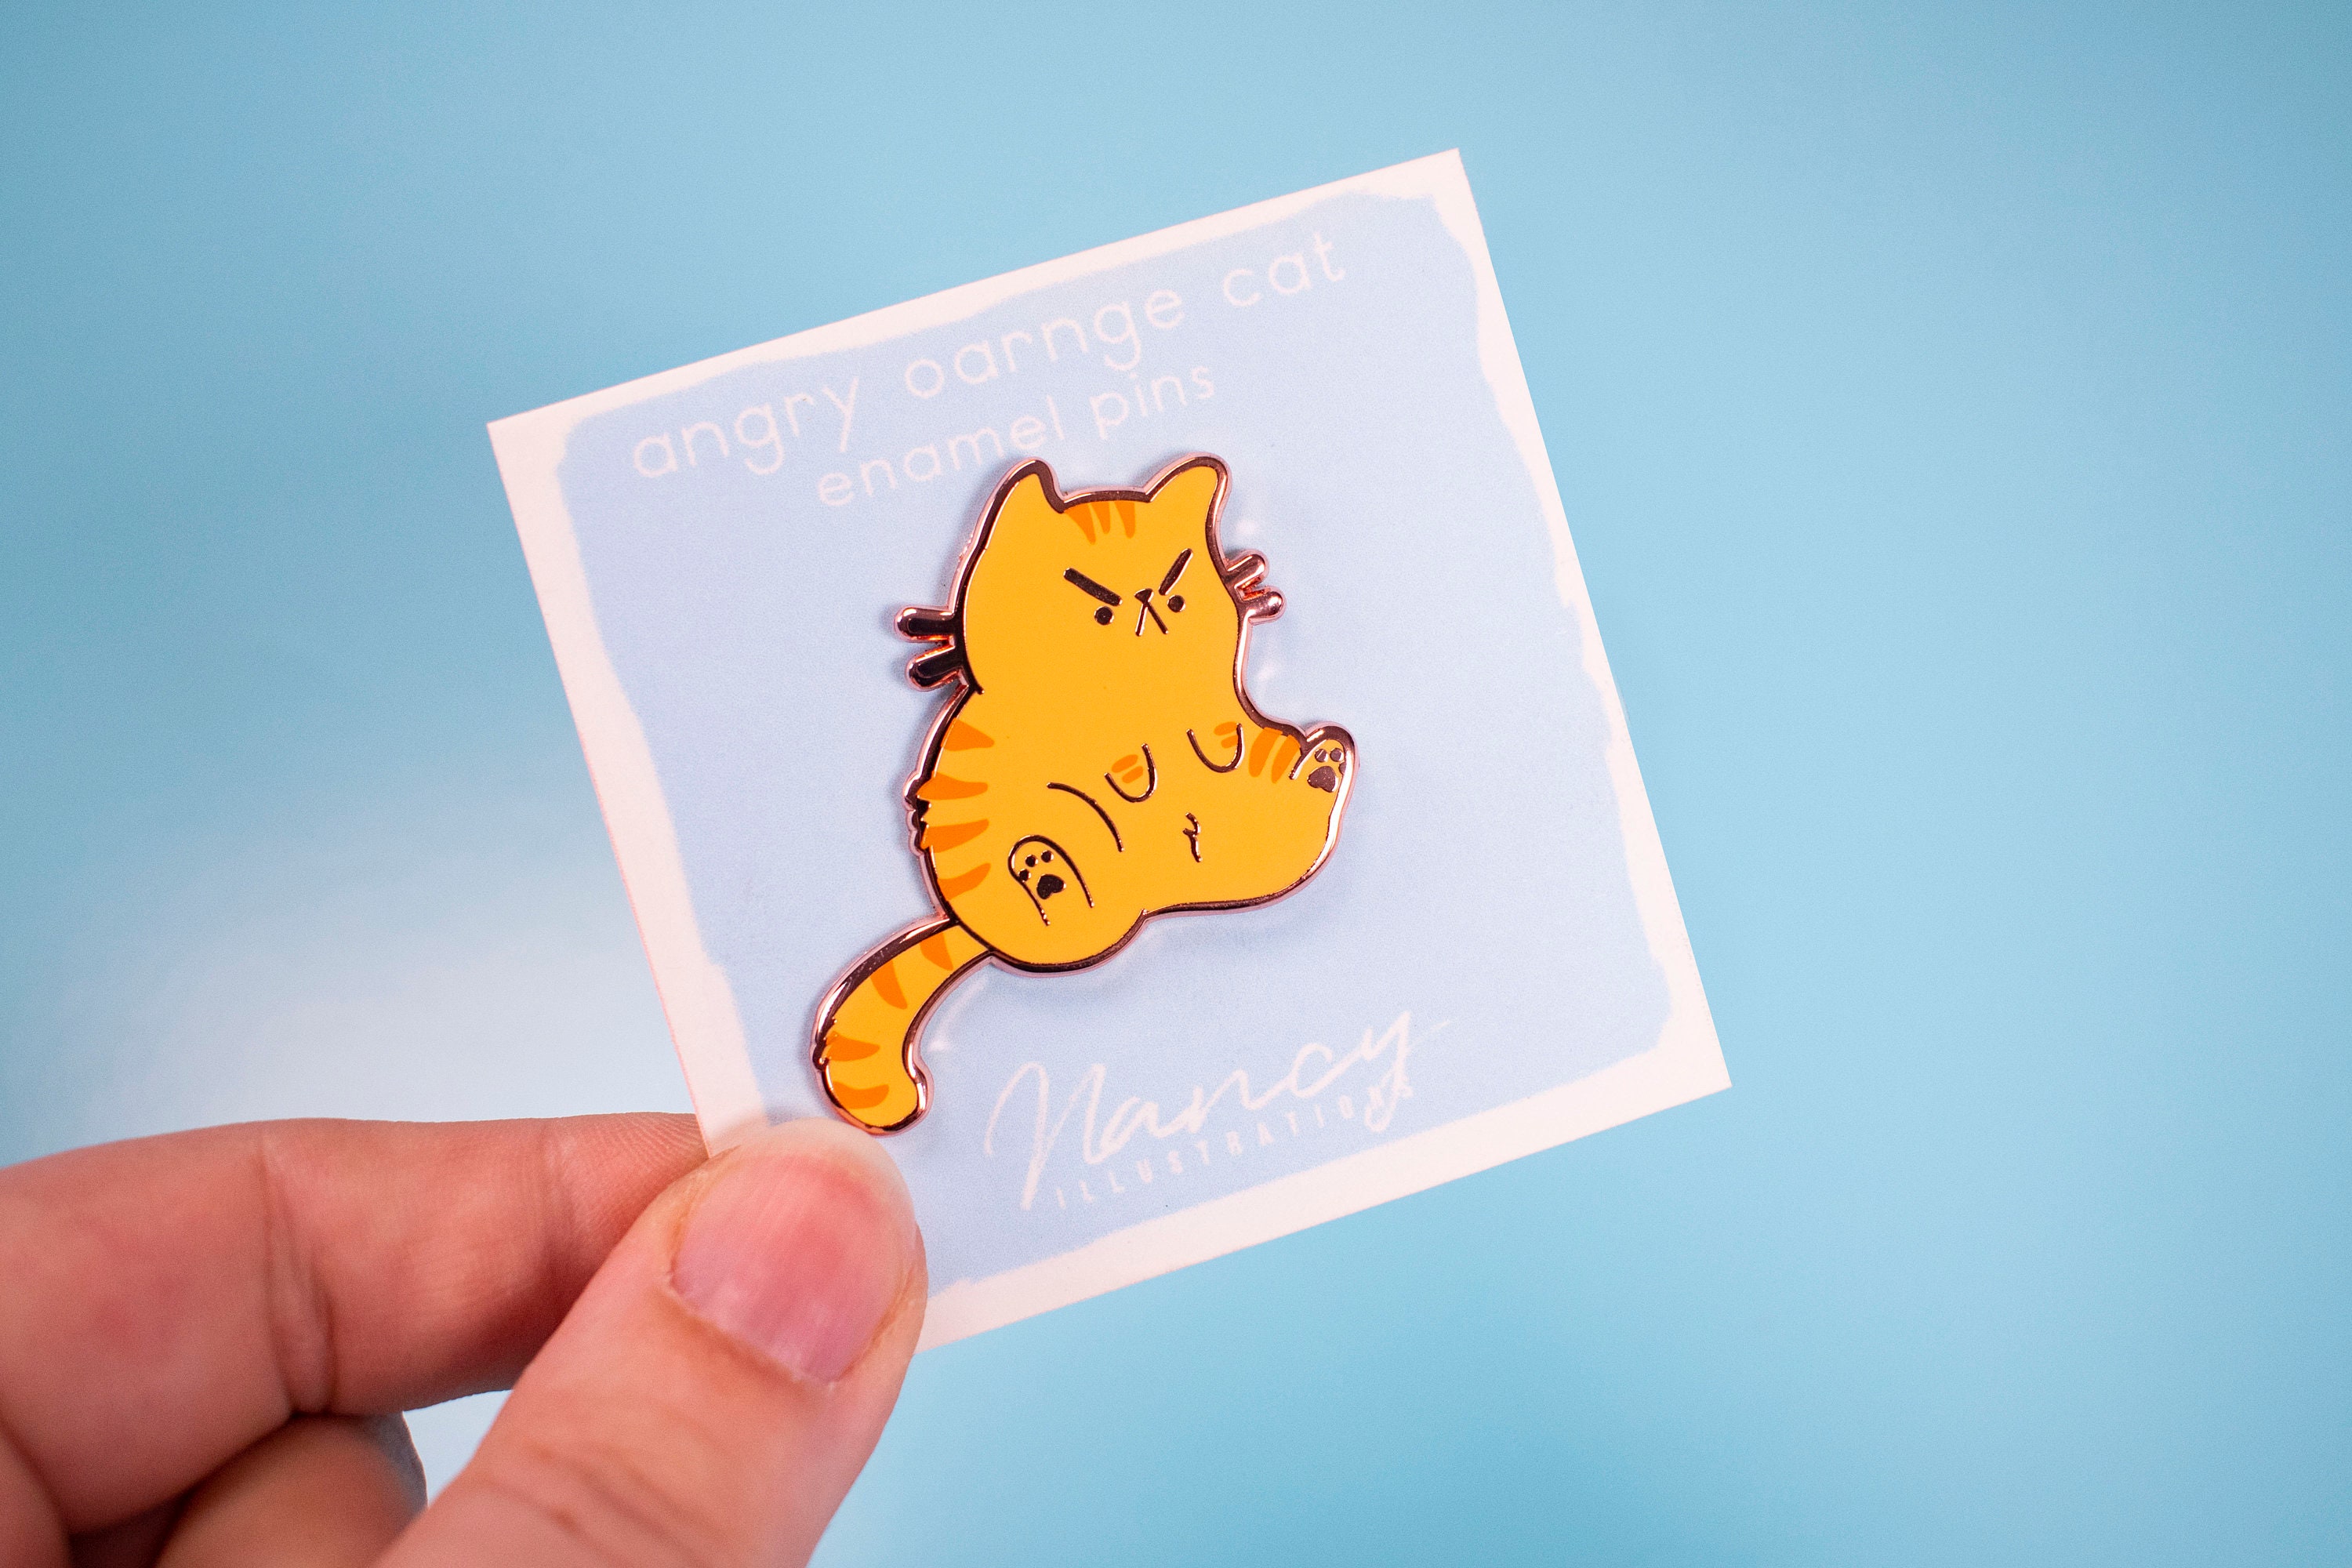 Killer cat enamel pin for cat lovers funny cat pins for her funny cat pins  for cat owners